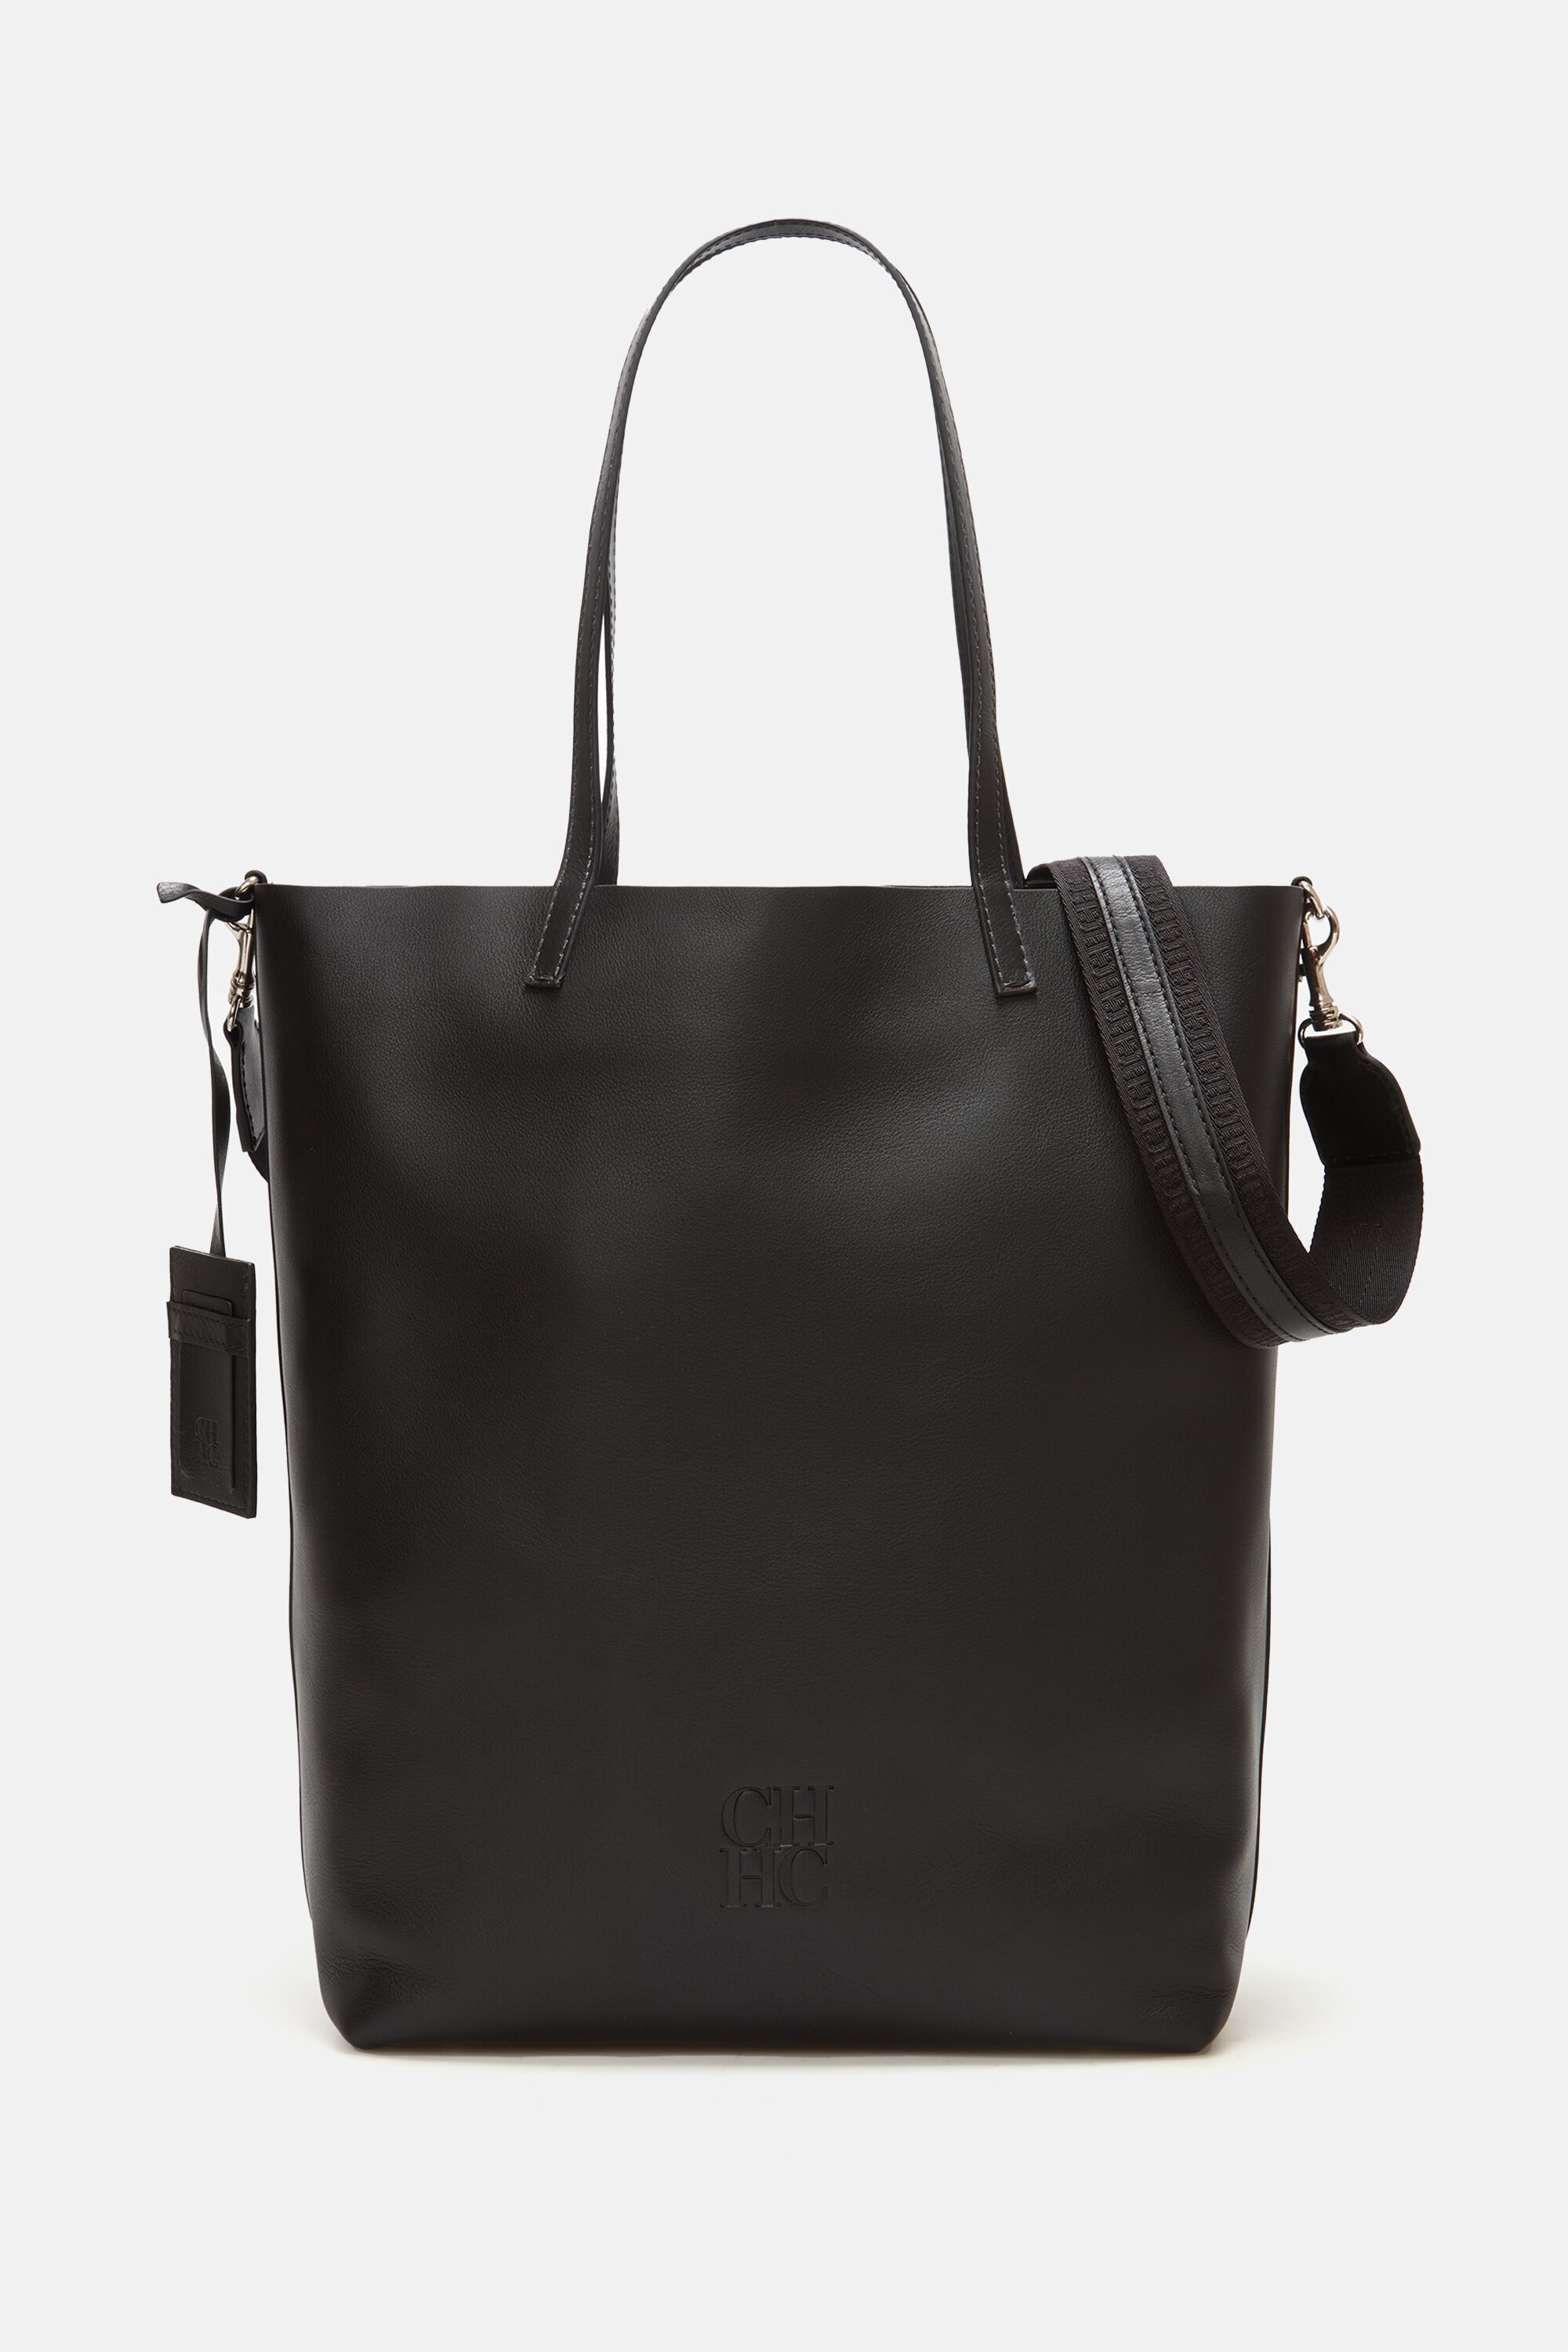 Men and Women Leather Medium Large Handbag Shoulder Bags Large